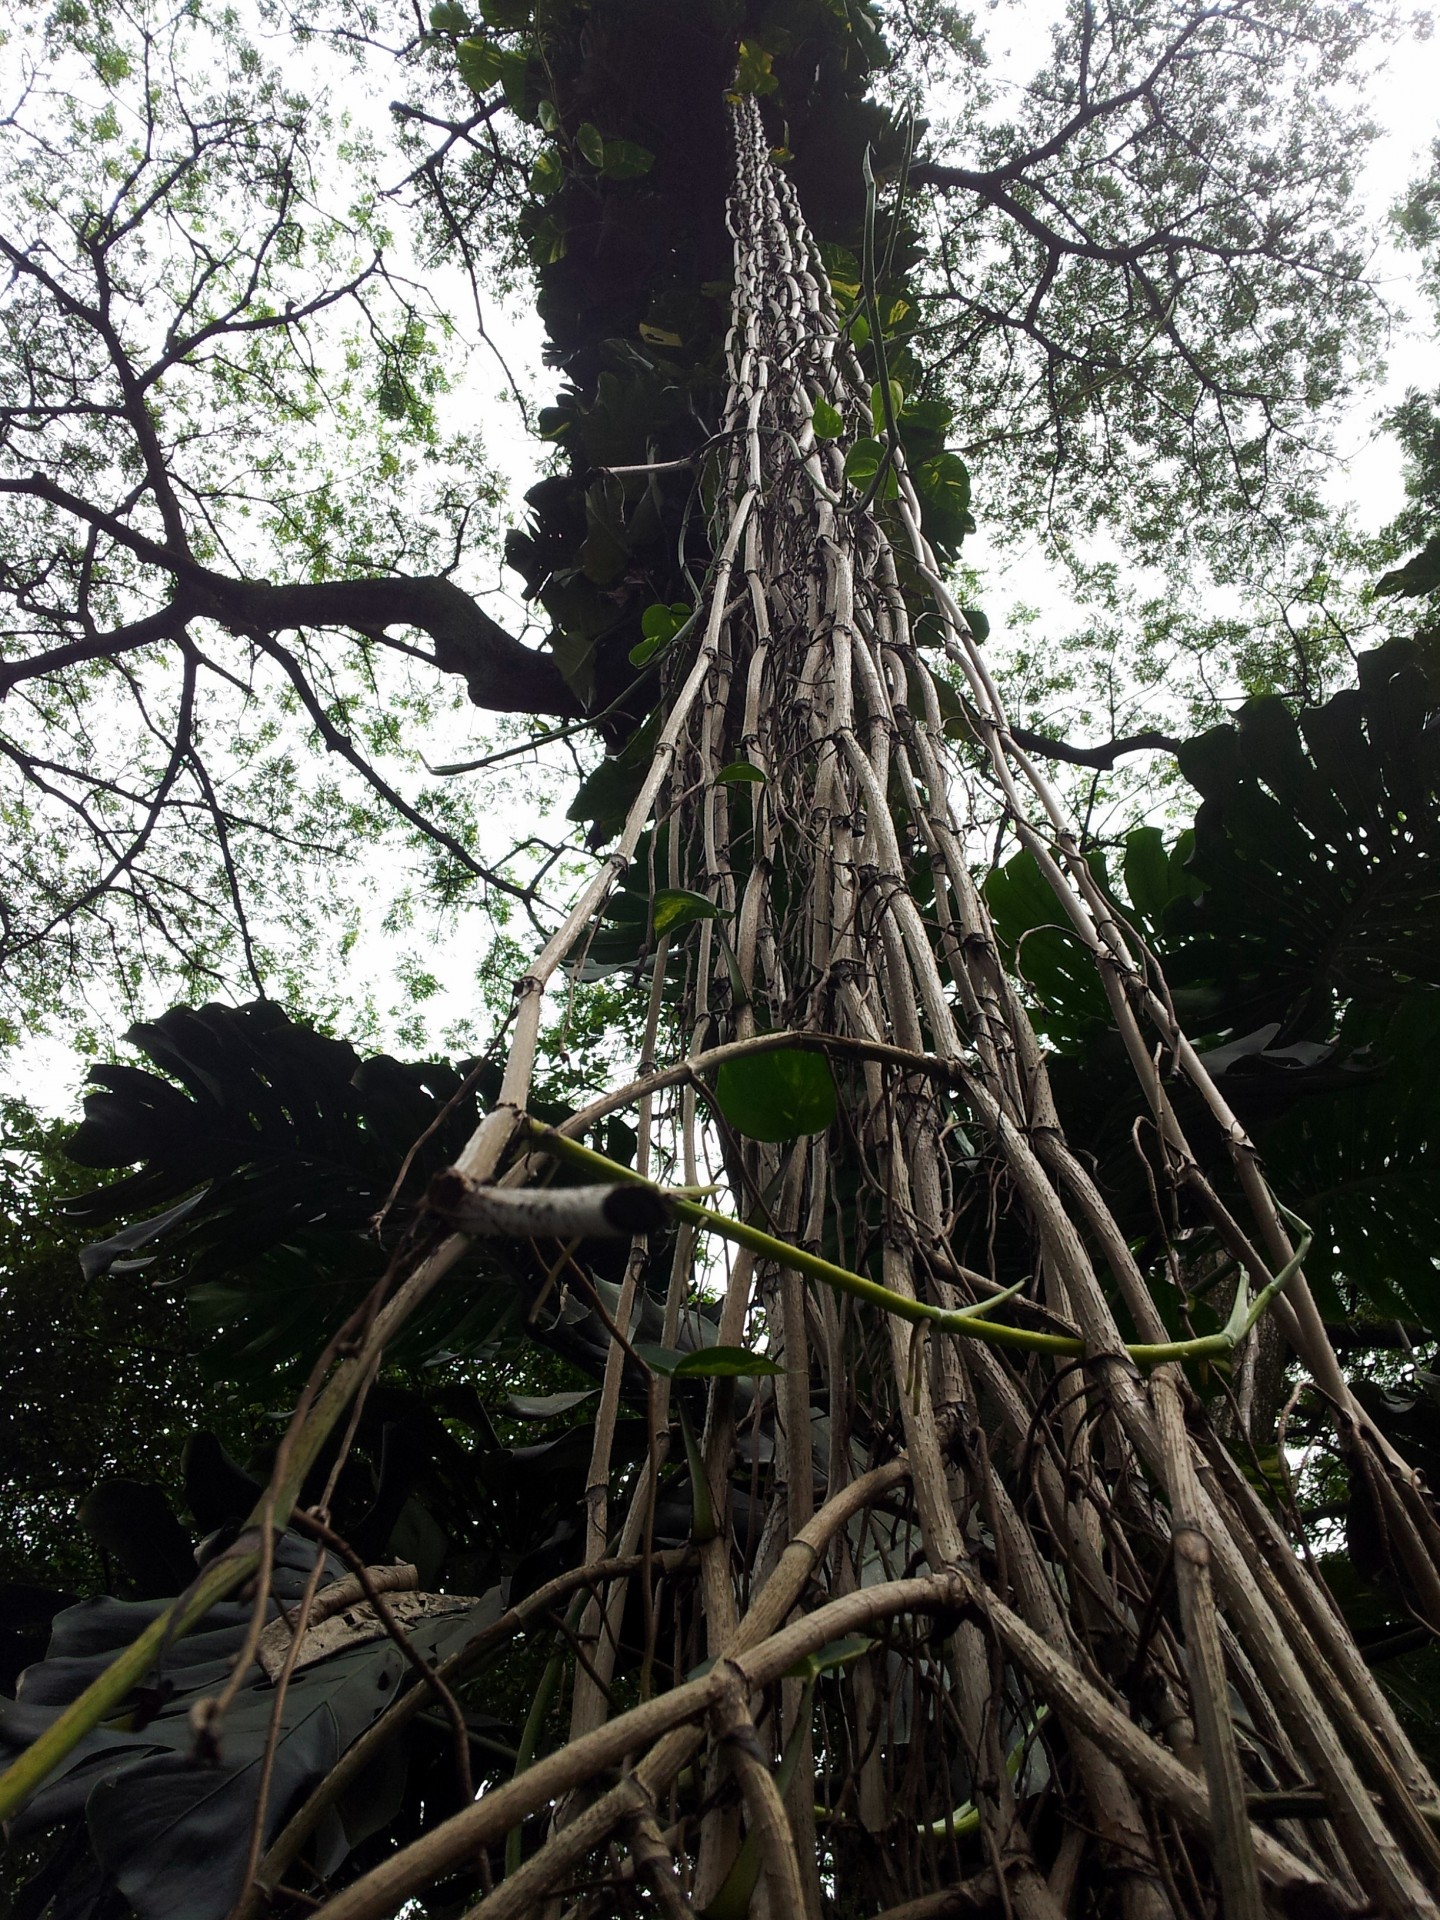 Hängen Reben aus dem hohen Baum